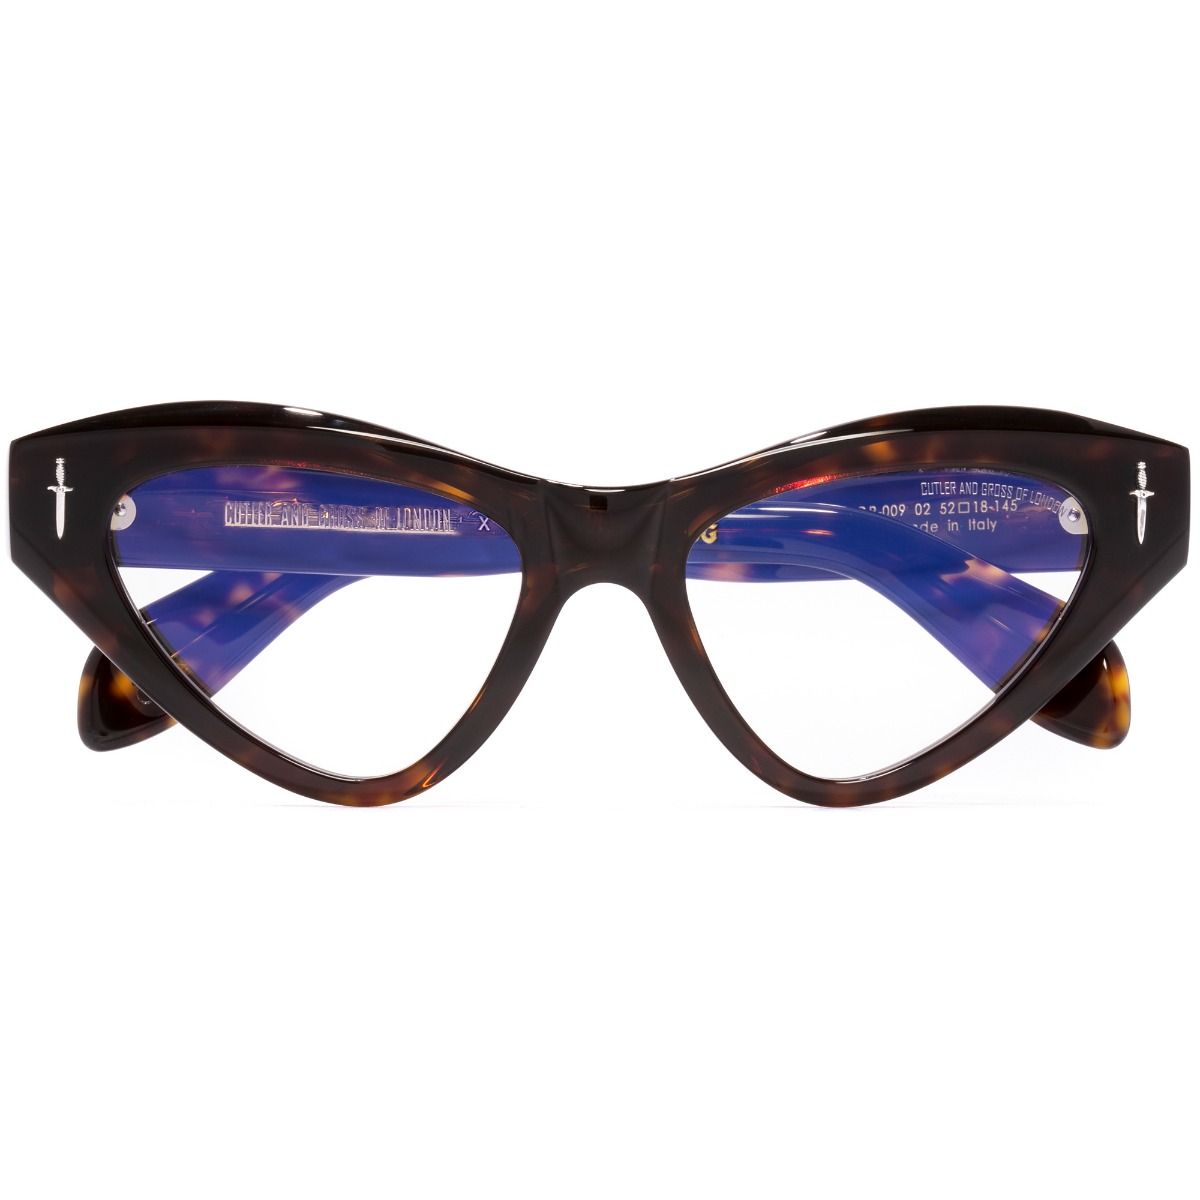 The Great Frog Mini Cat Eye Optical Glasses